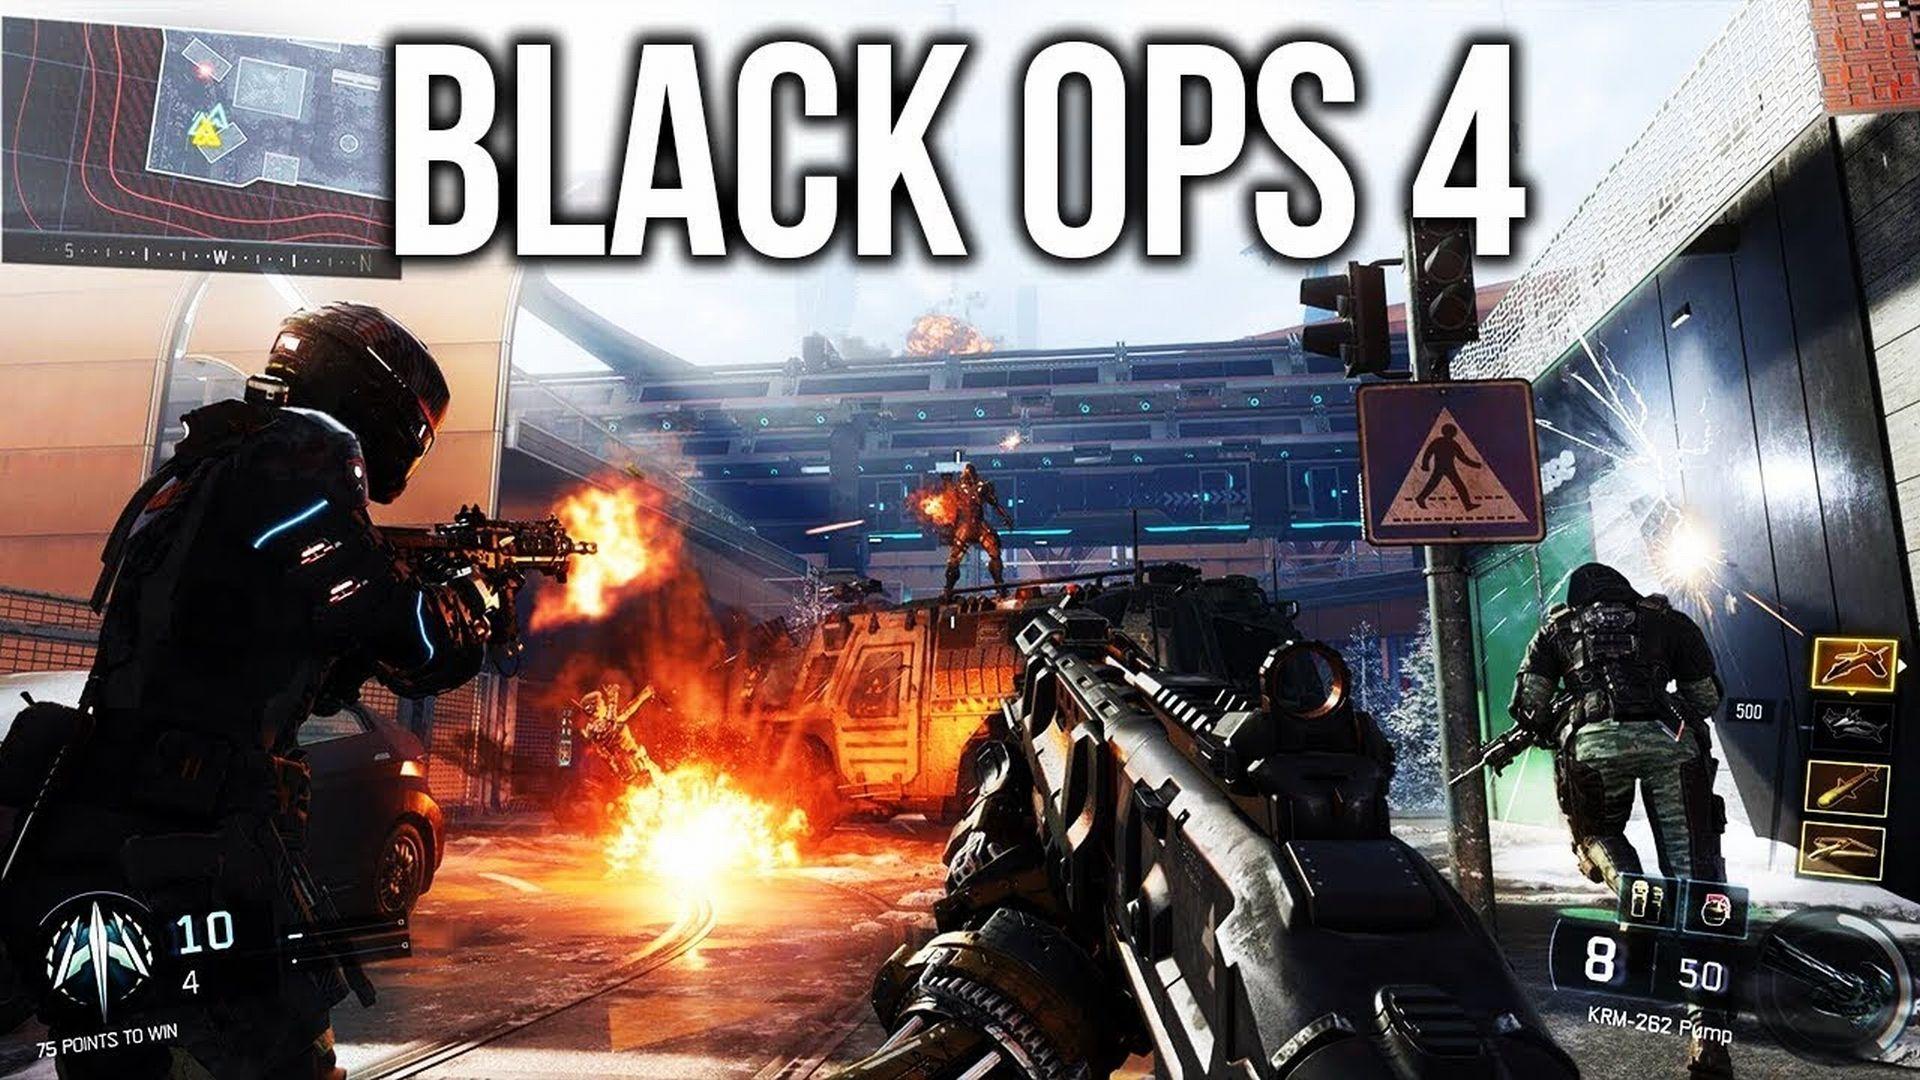 Call of Duty Black Ops 4 Wallpaper HDKWallpaperApp